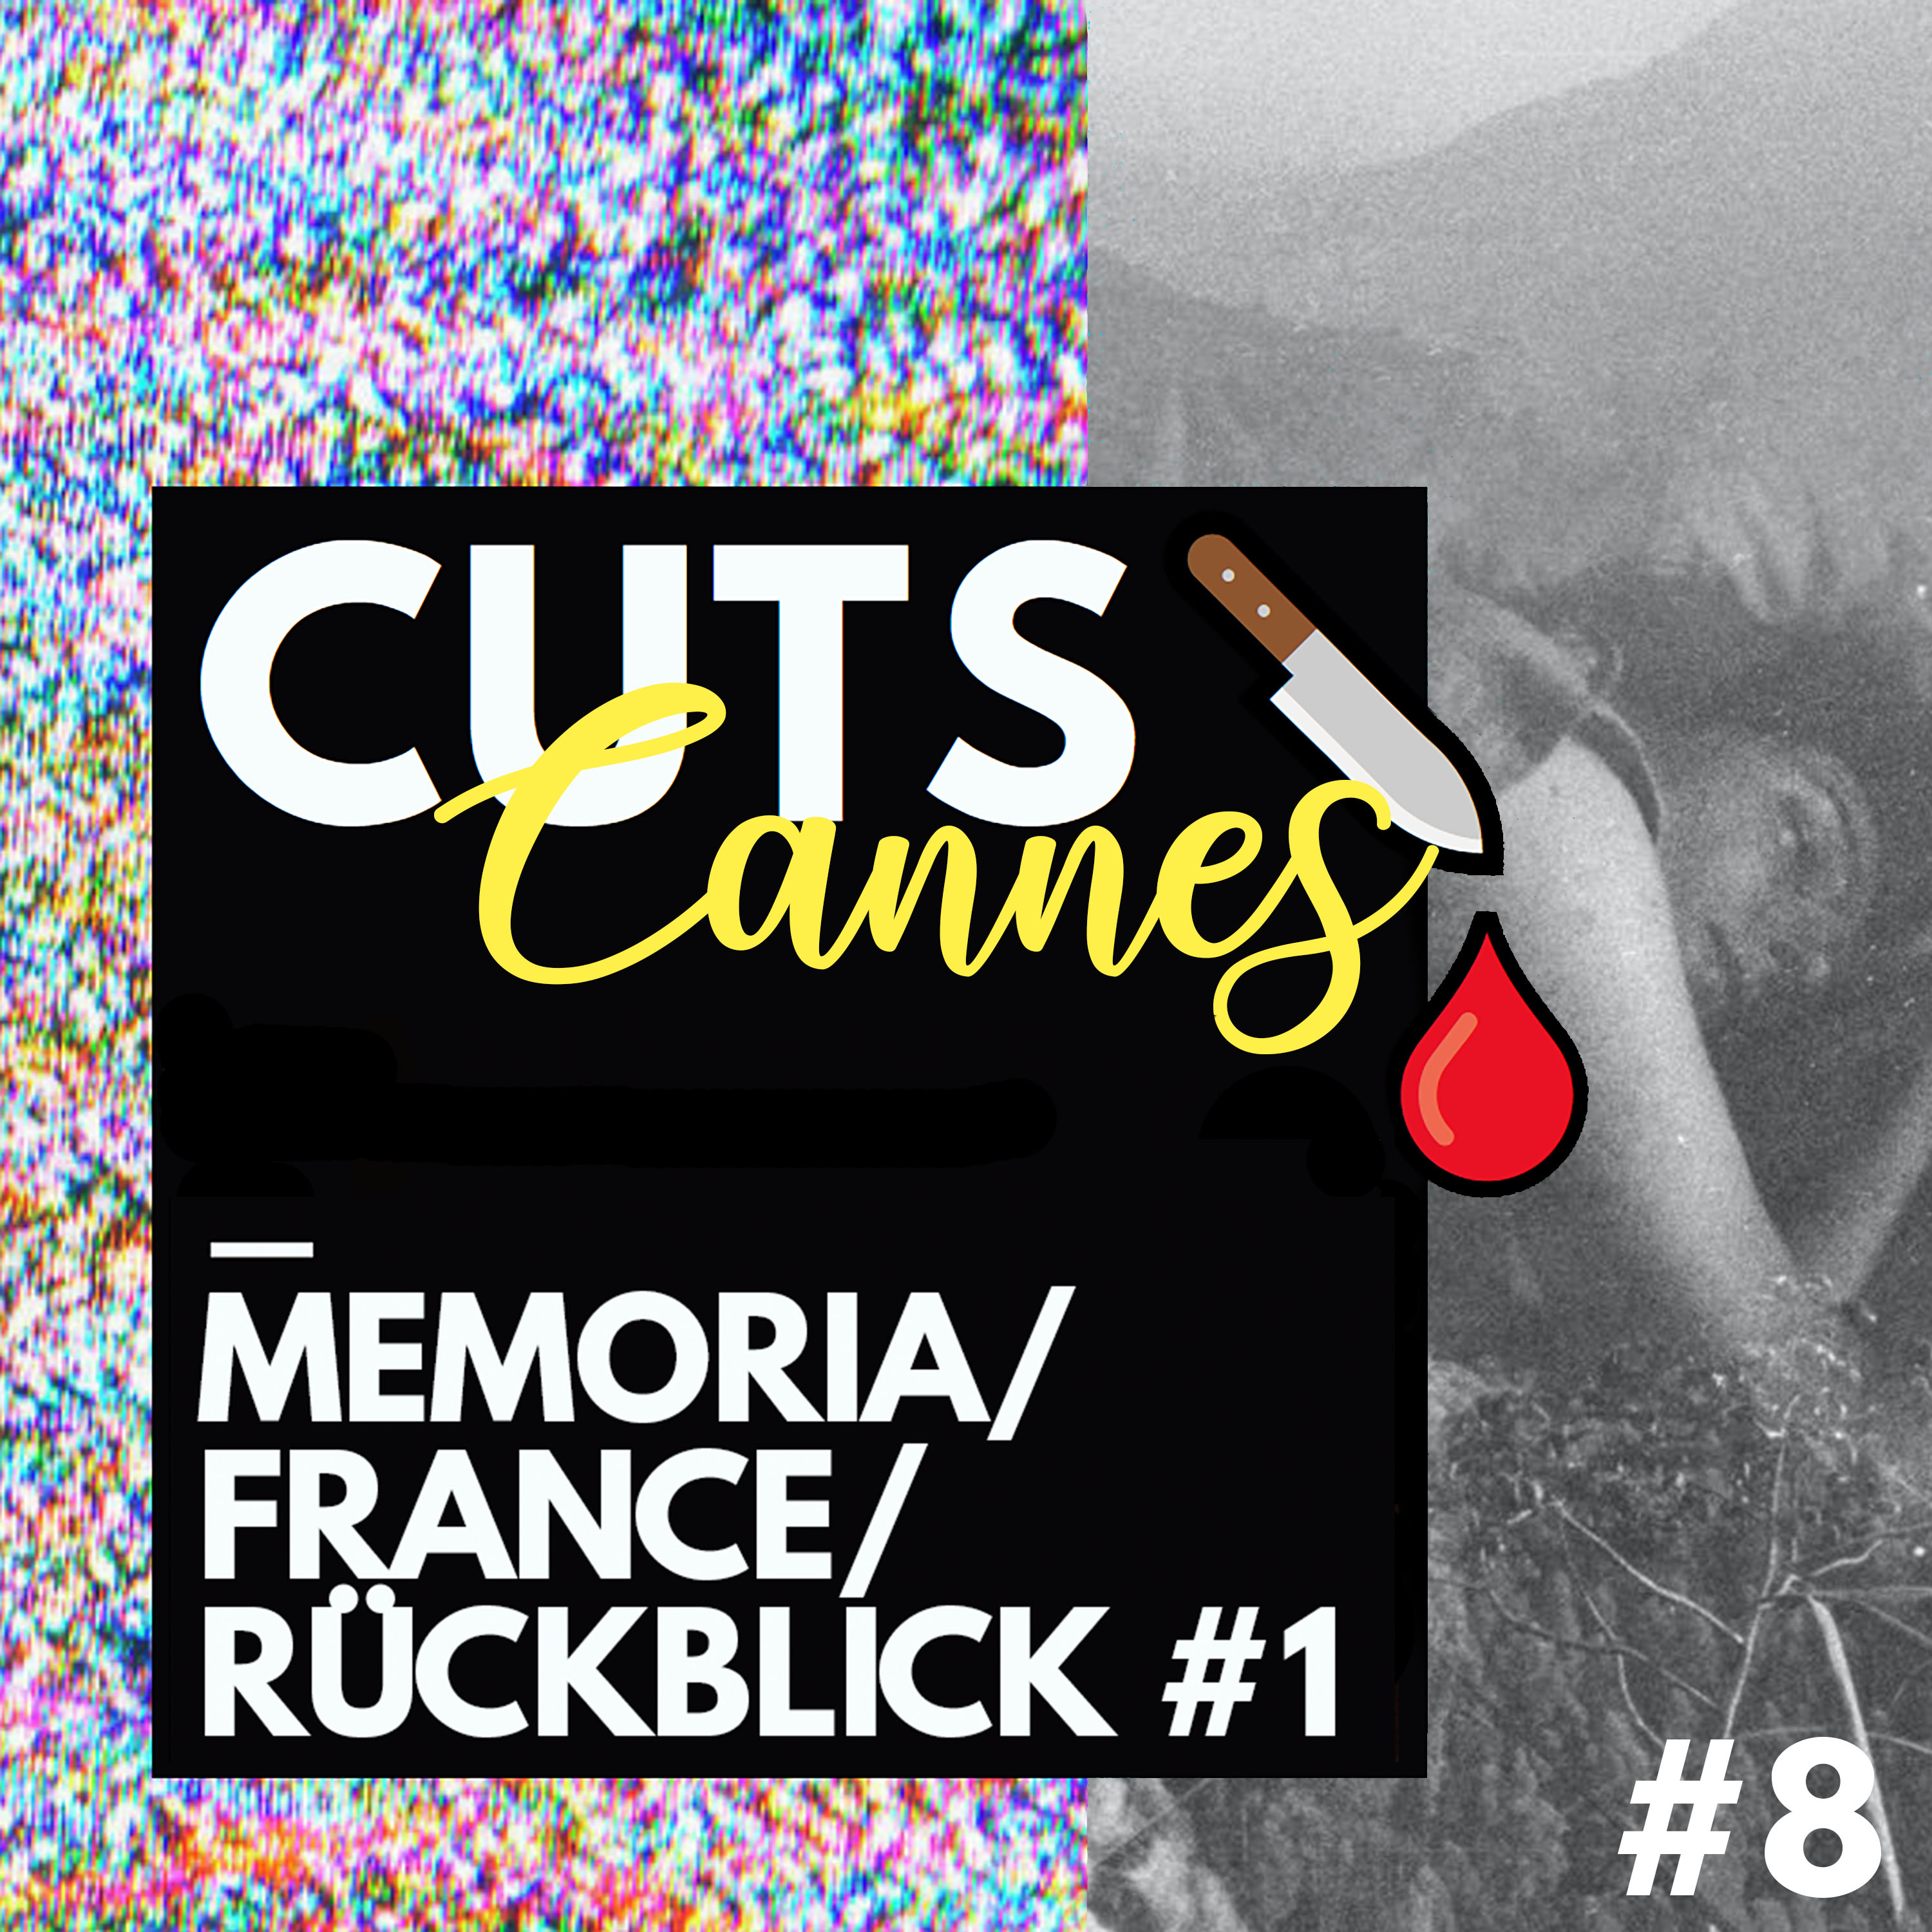 Cannes #8 - Memoria, France & Rückblick #1